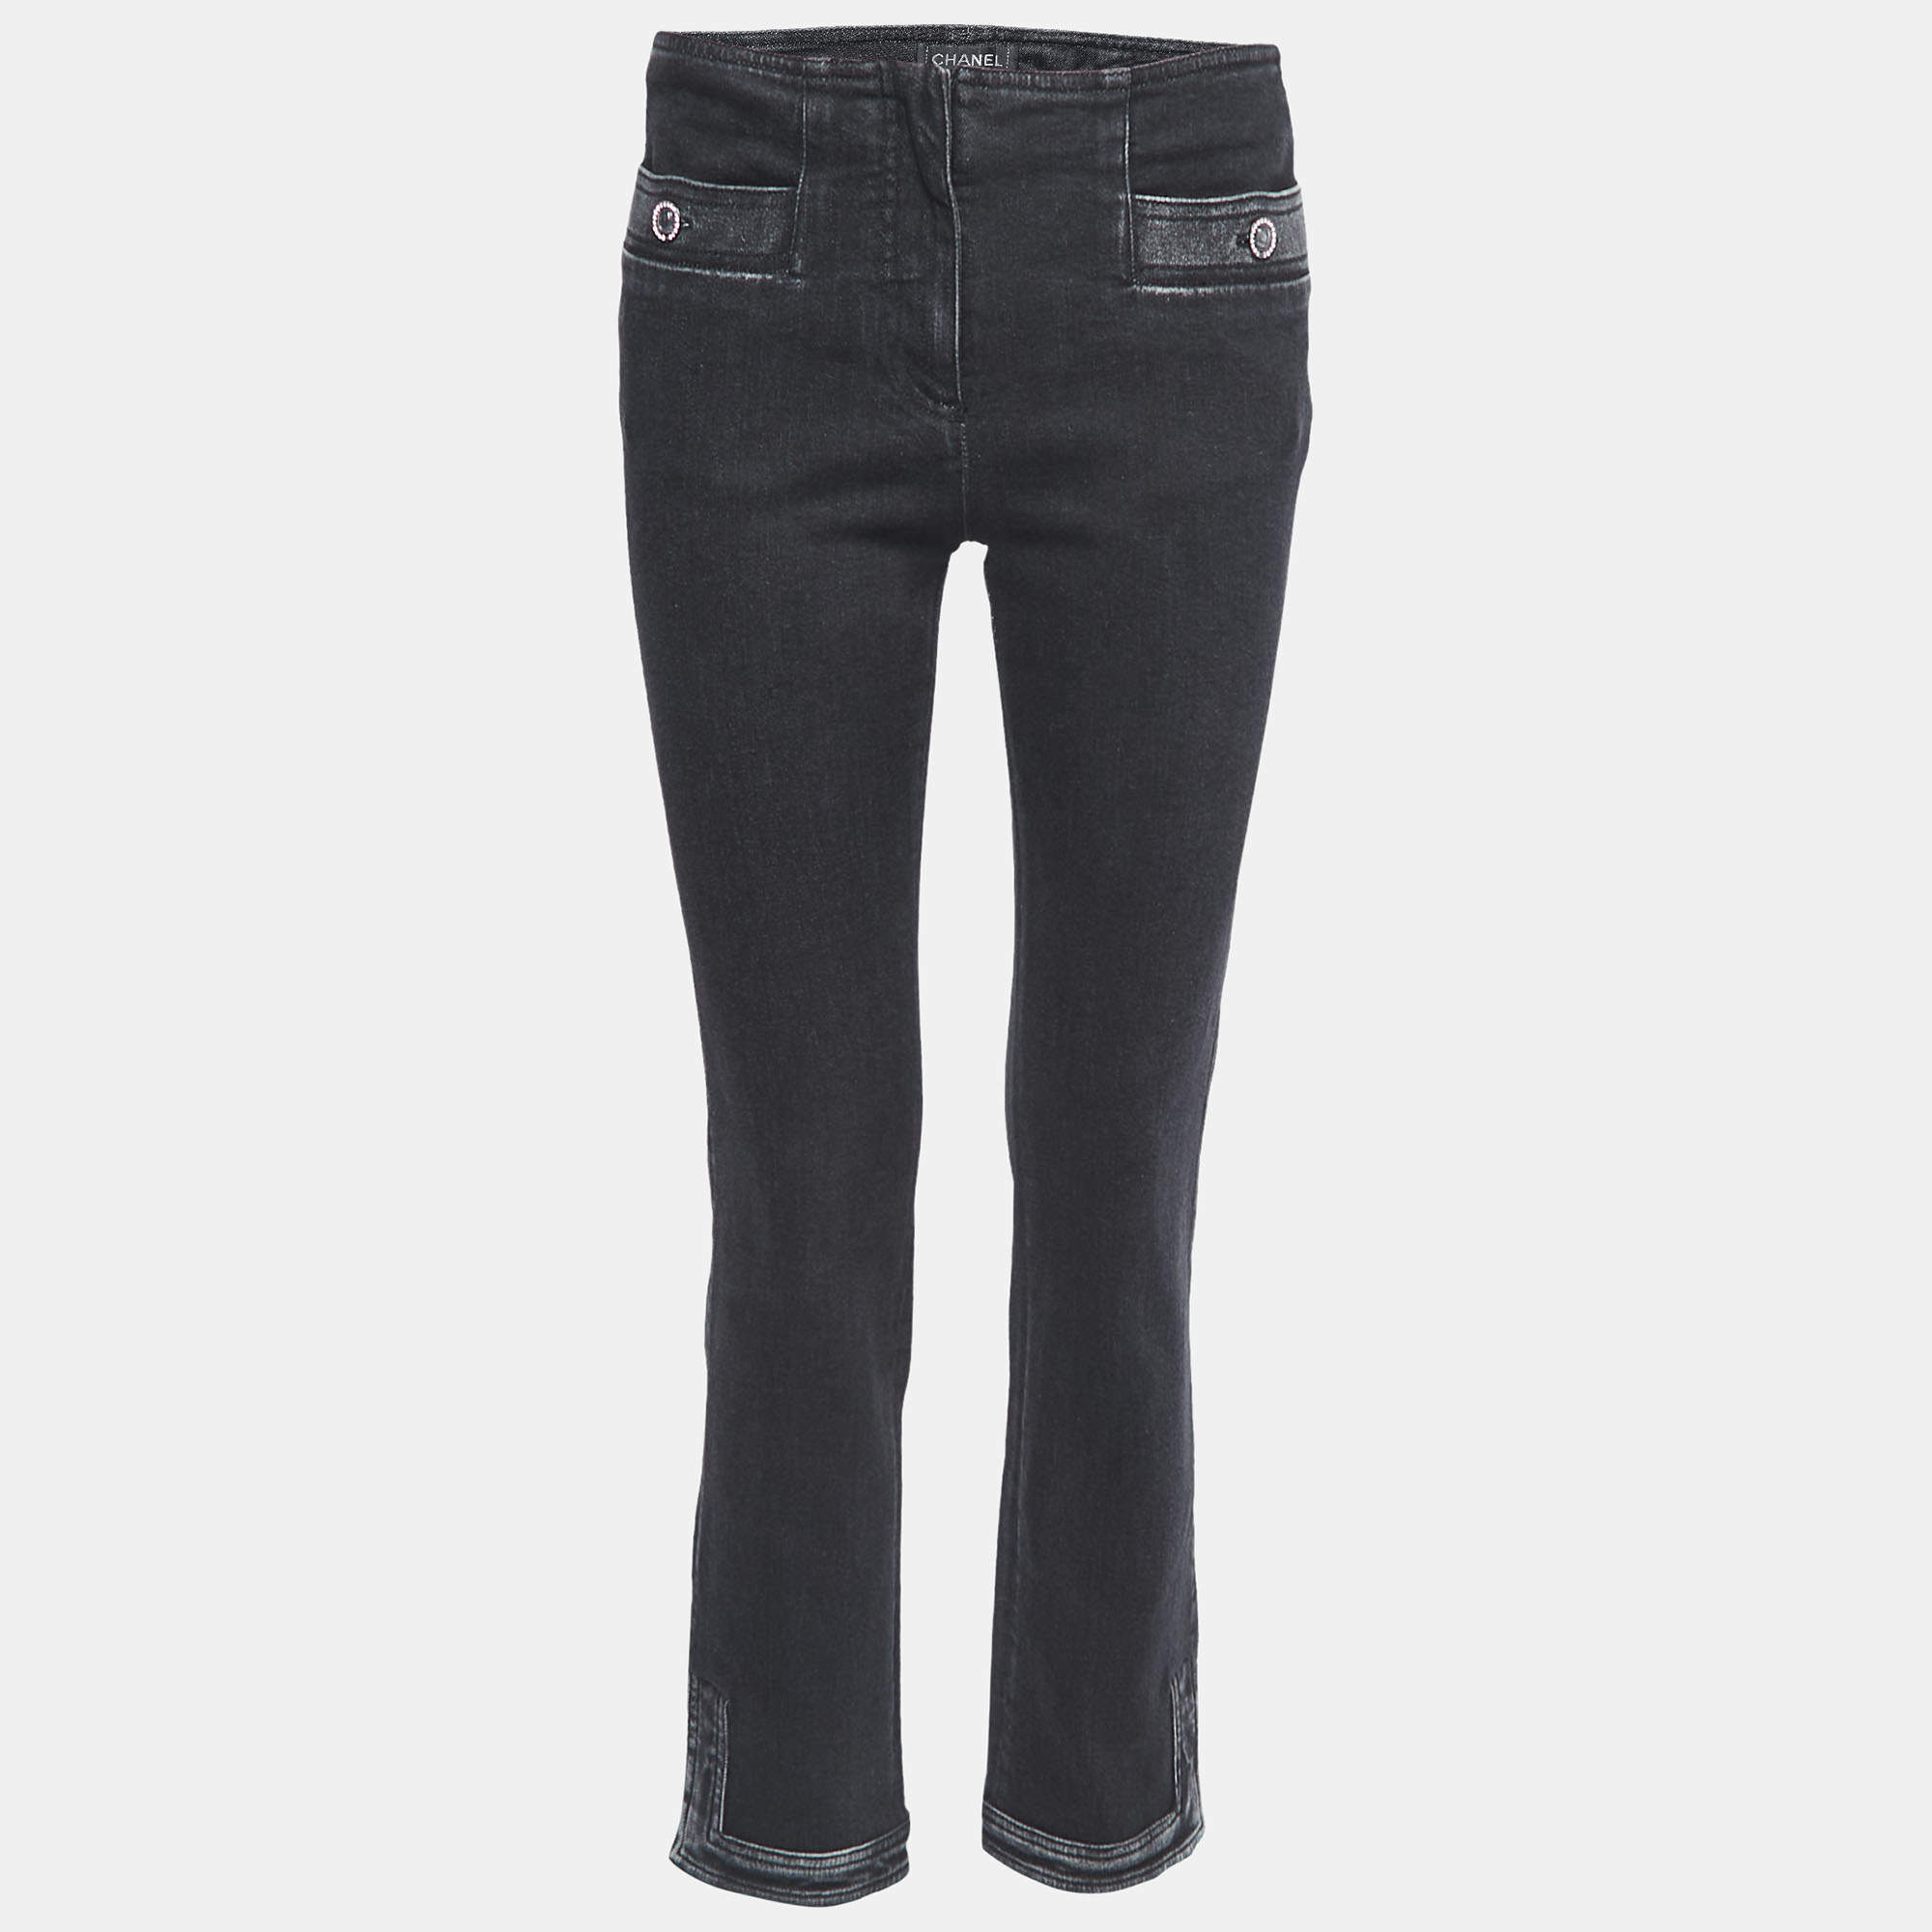 Chanel Black/Grey Denim Mid-Rise Skinny Jeans M Waist 29 Chanel